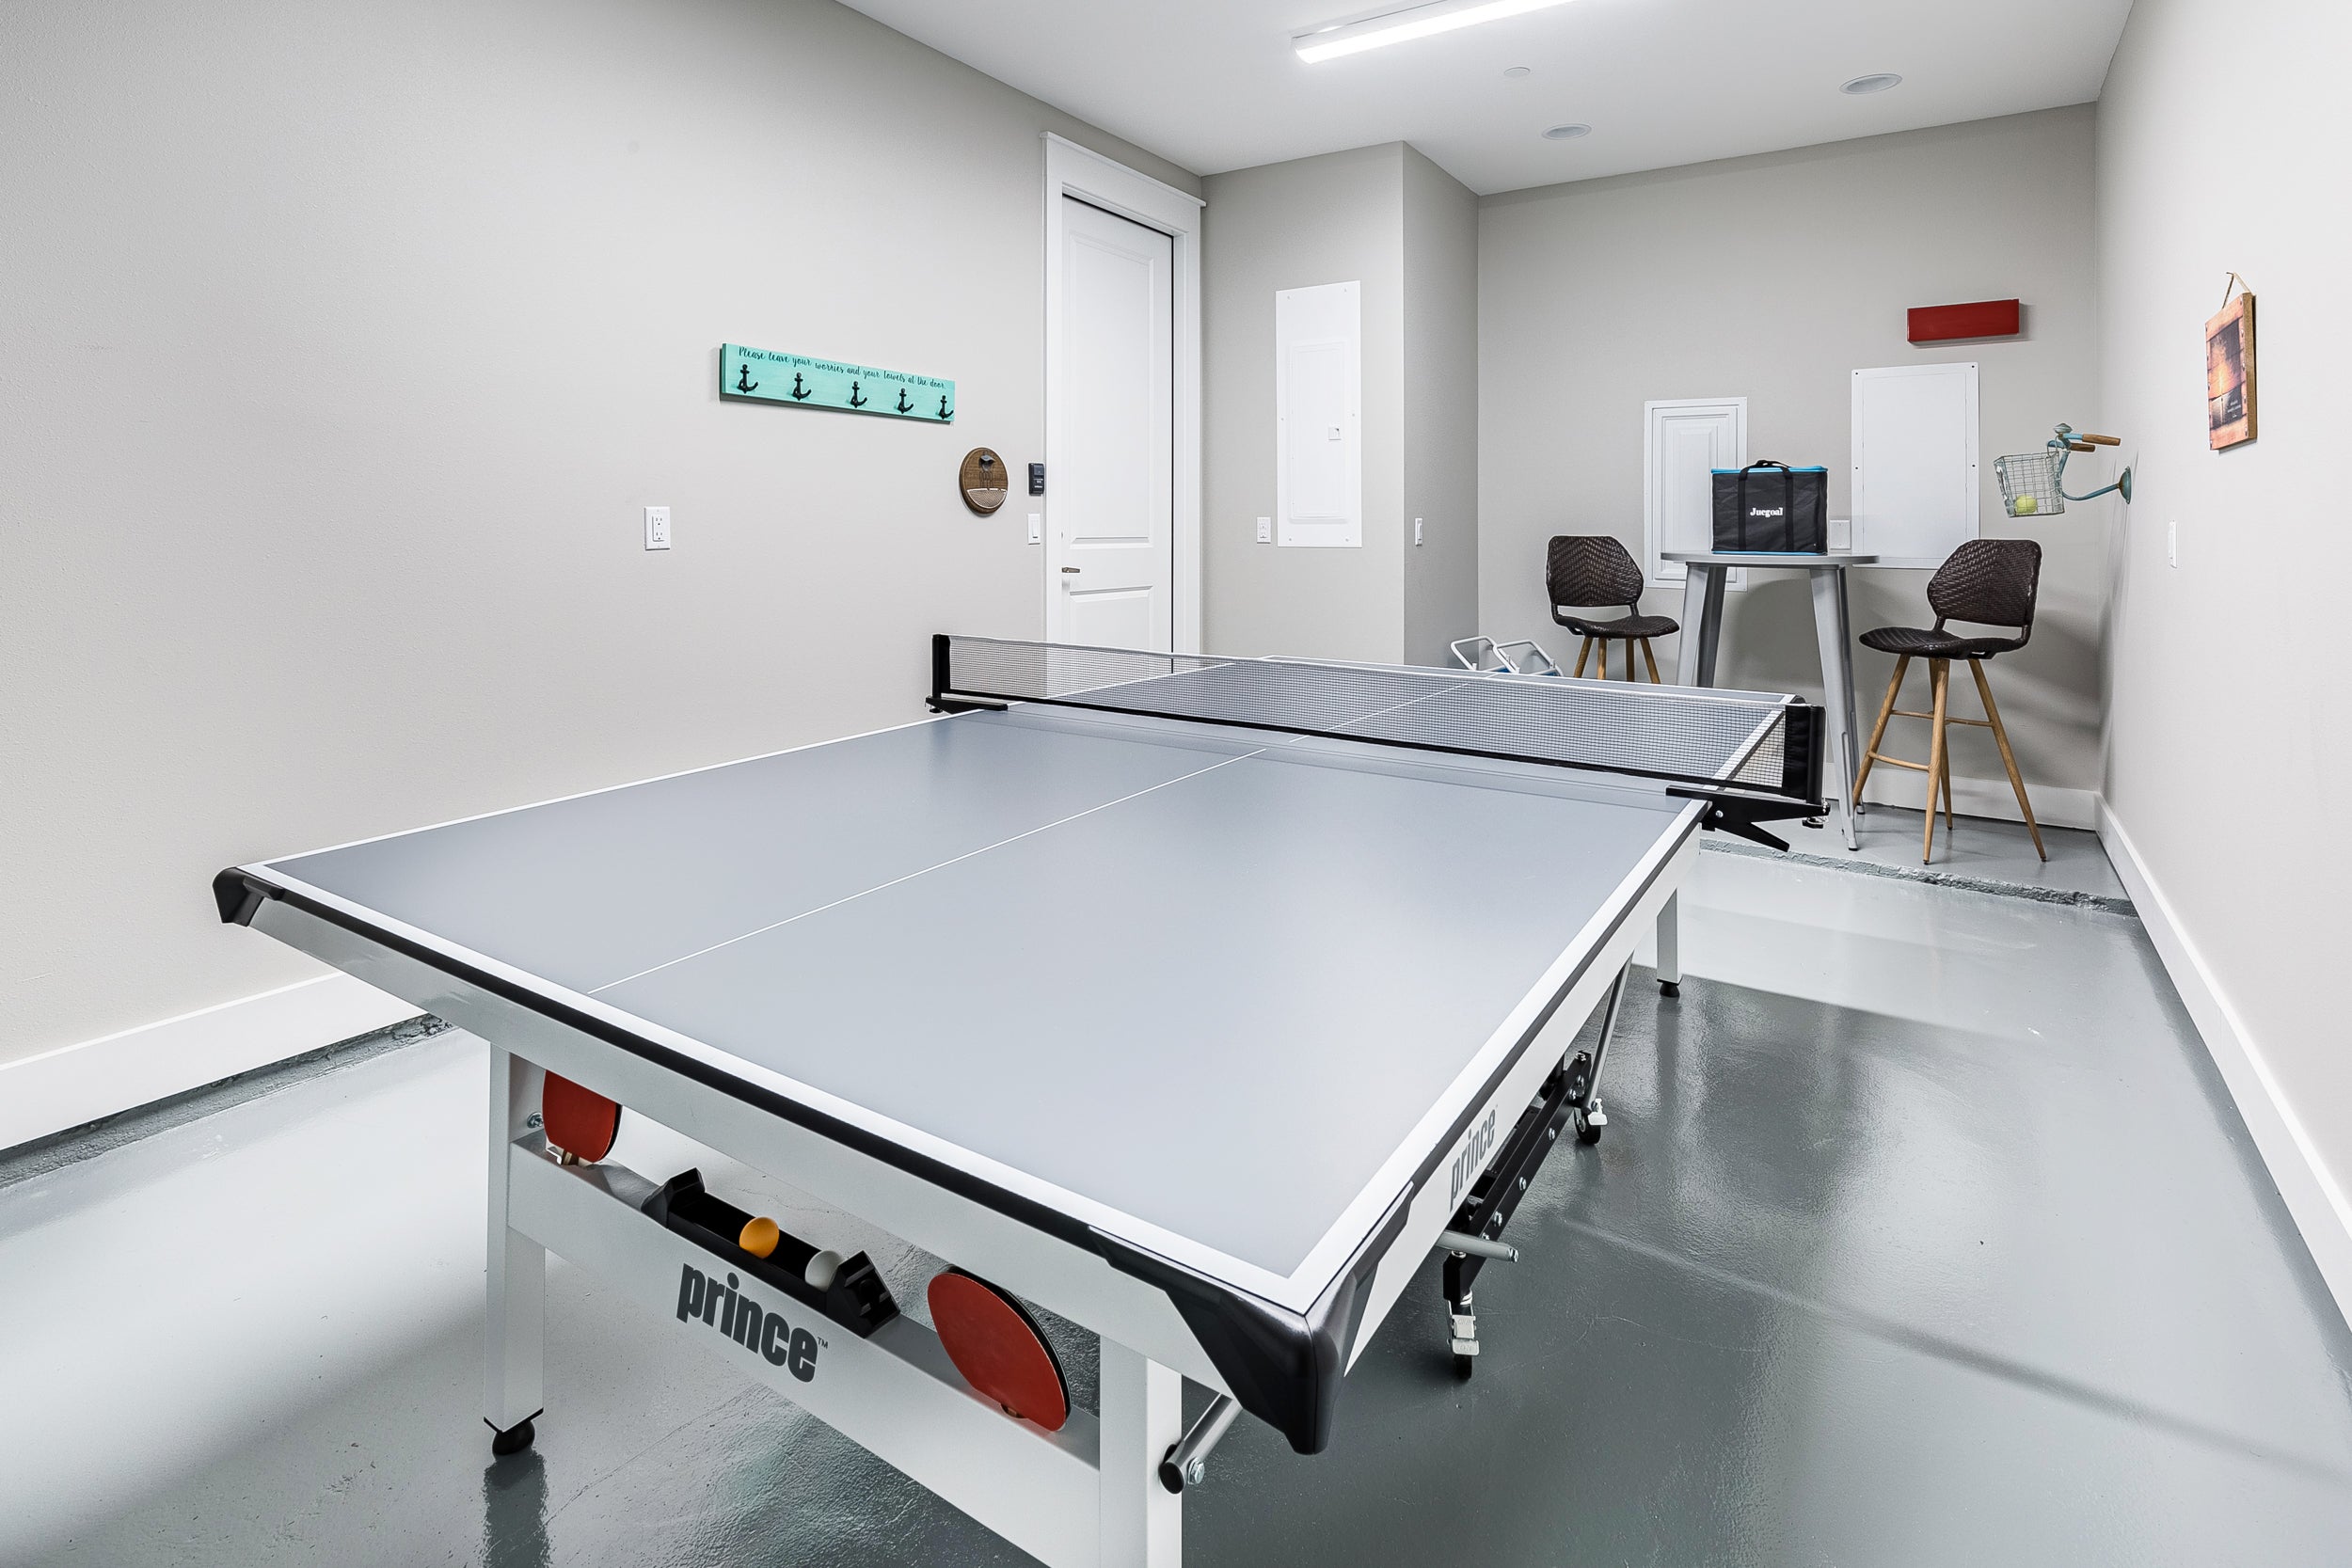 Garage has ping pong table!